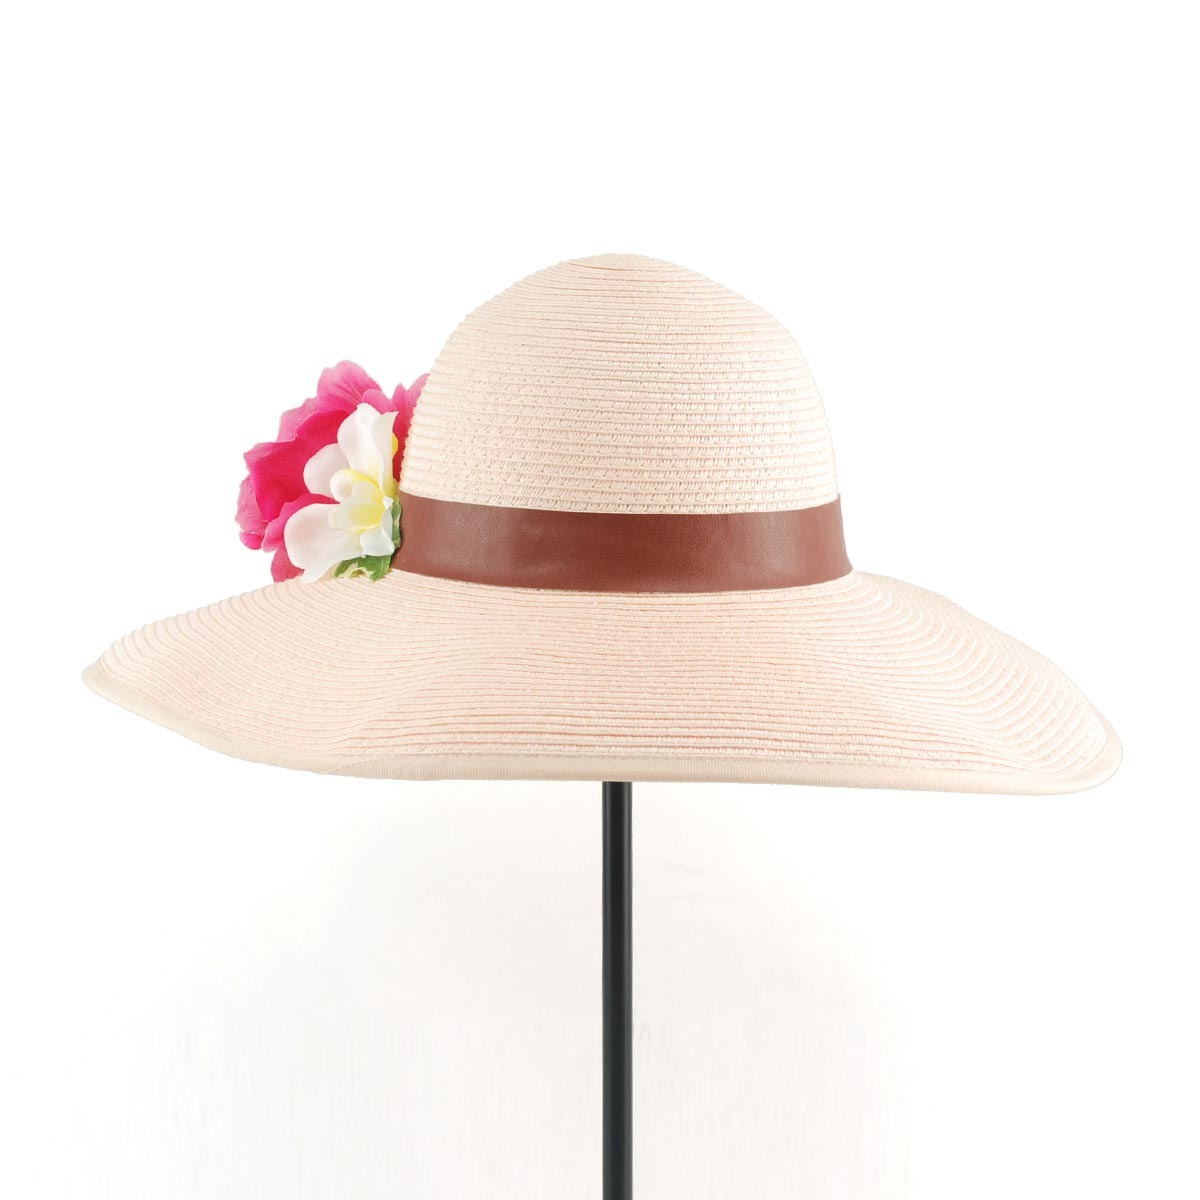 Captale hat women's summer flower leather light pink large brim strawhat sunbonnet beach cap sunscreen